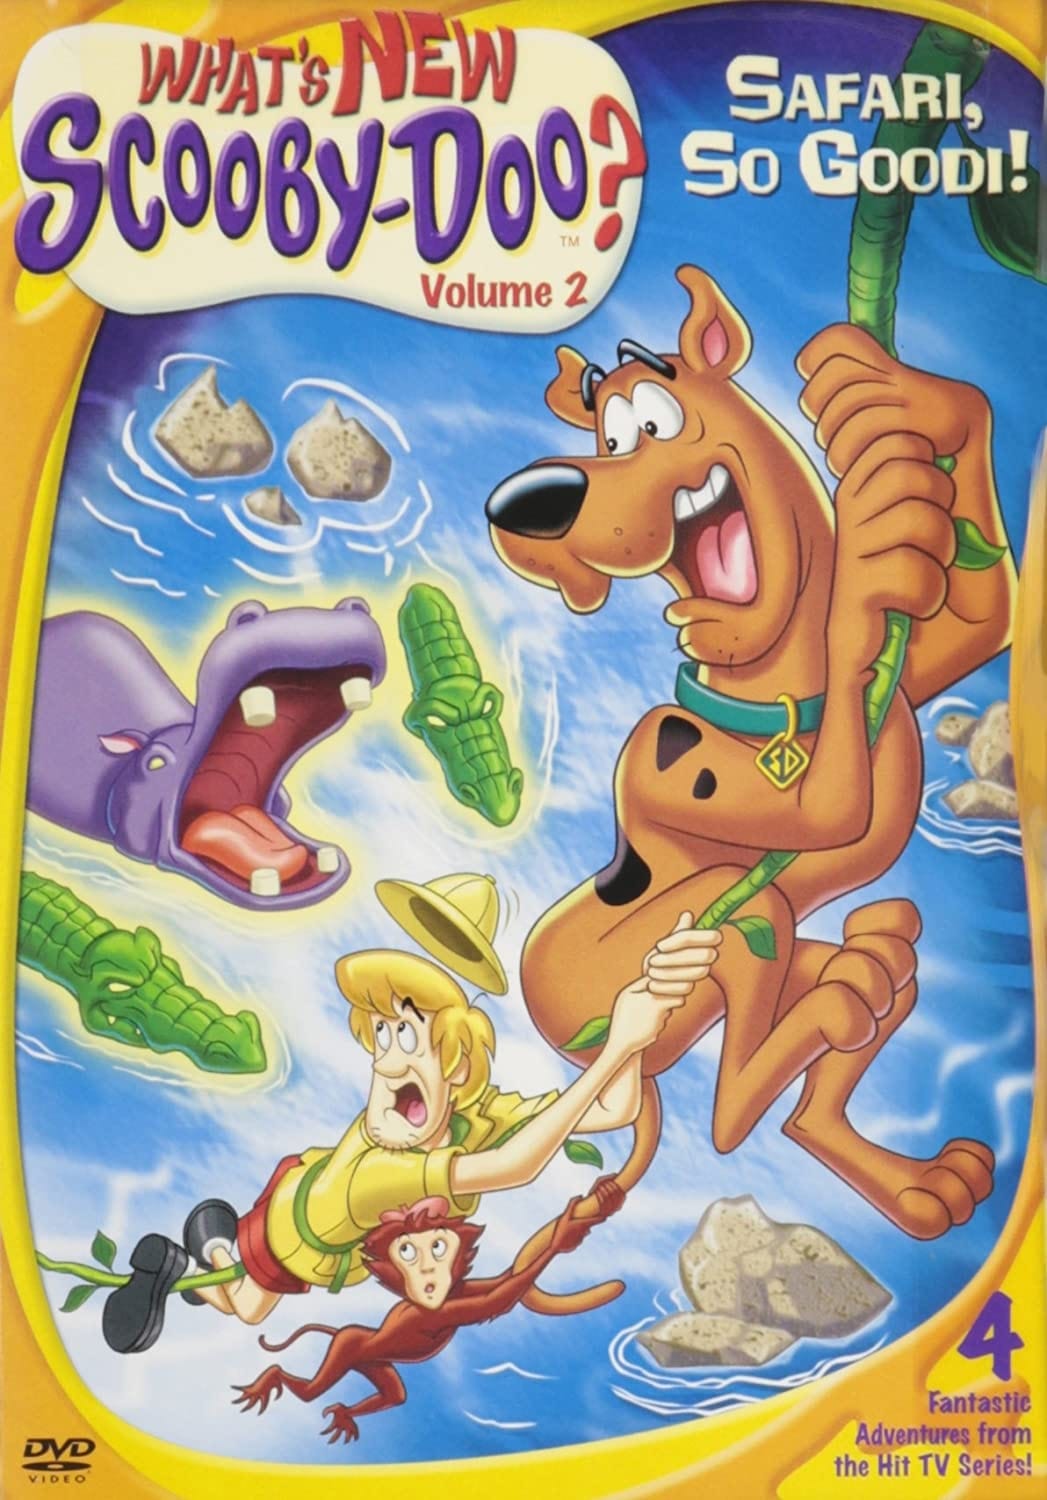 What's New, Scooby-Doo? Vol. 2: Safari So Good! (2004)